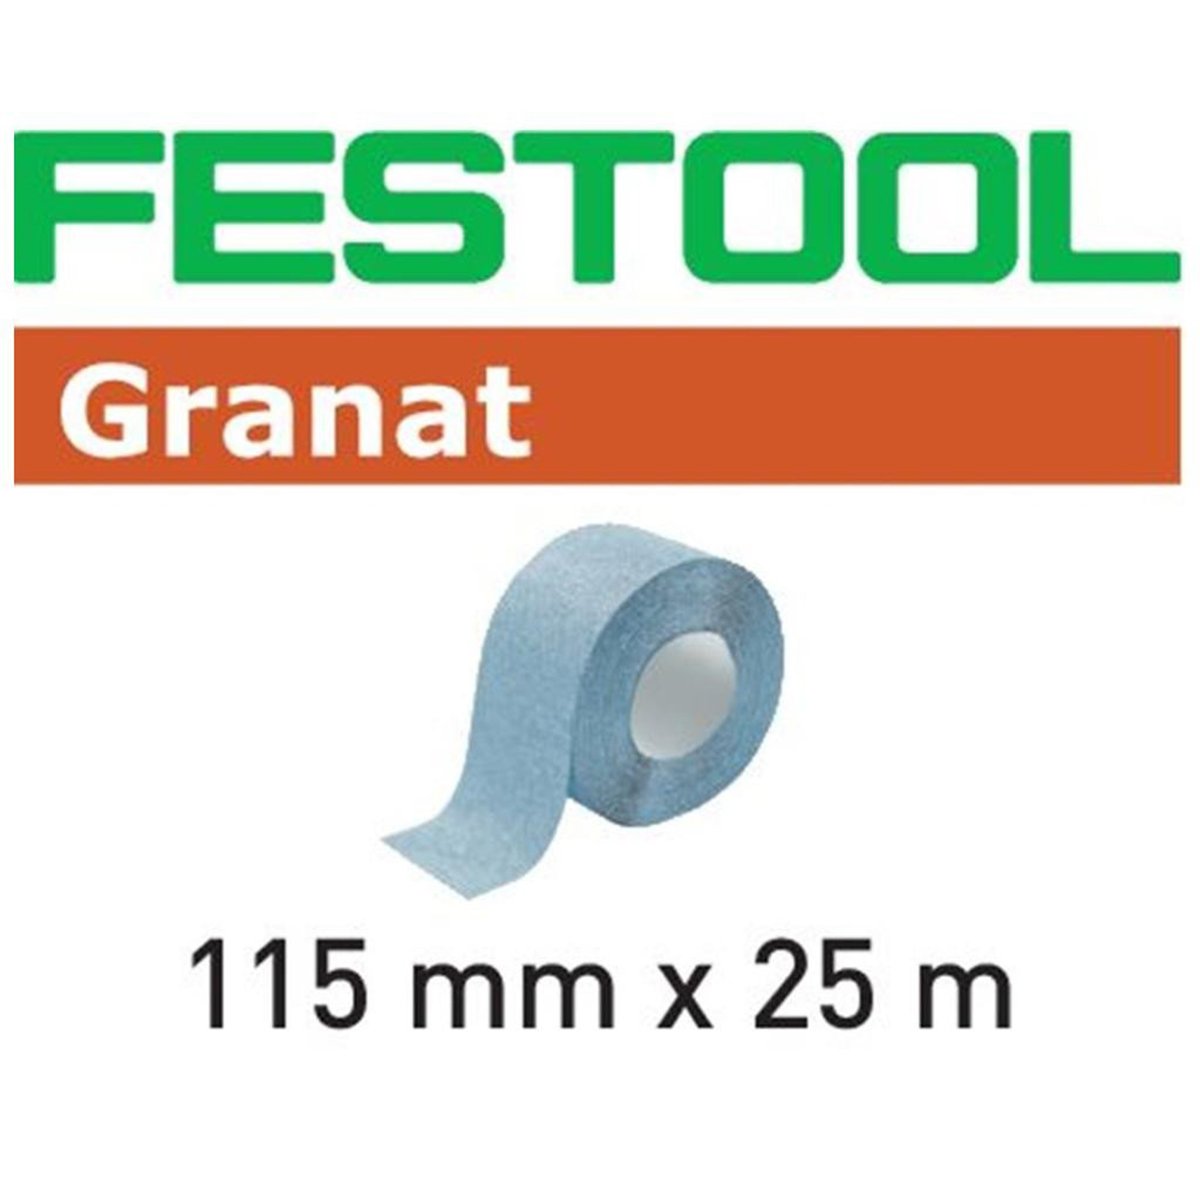 A 25m long, 115mm wide roll of Festool Granat abrasive for hand sanding.